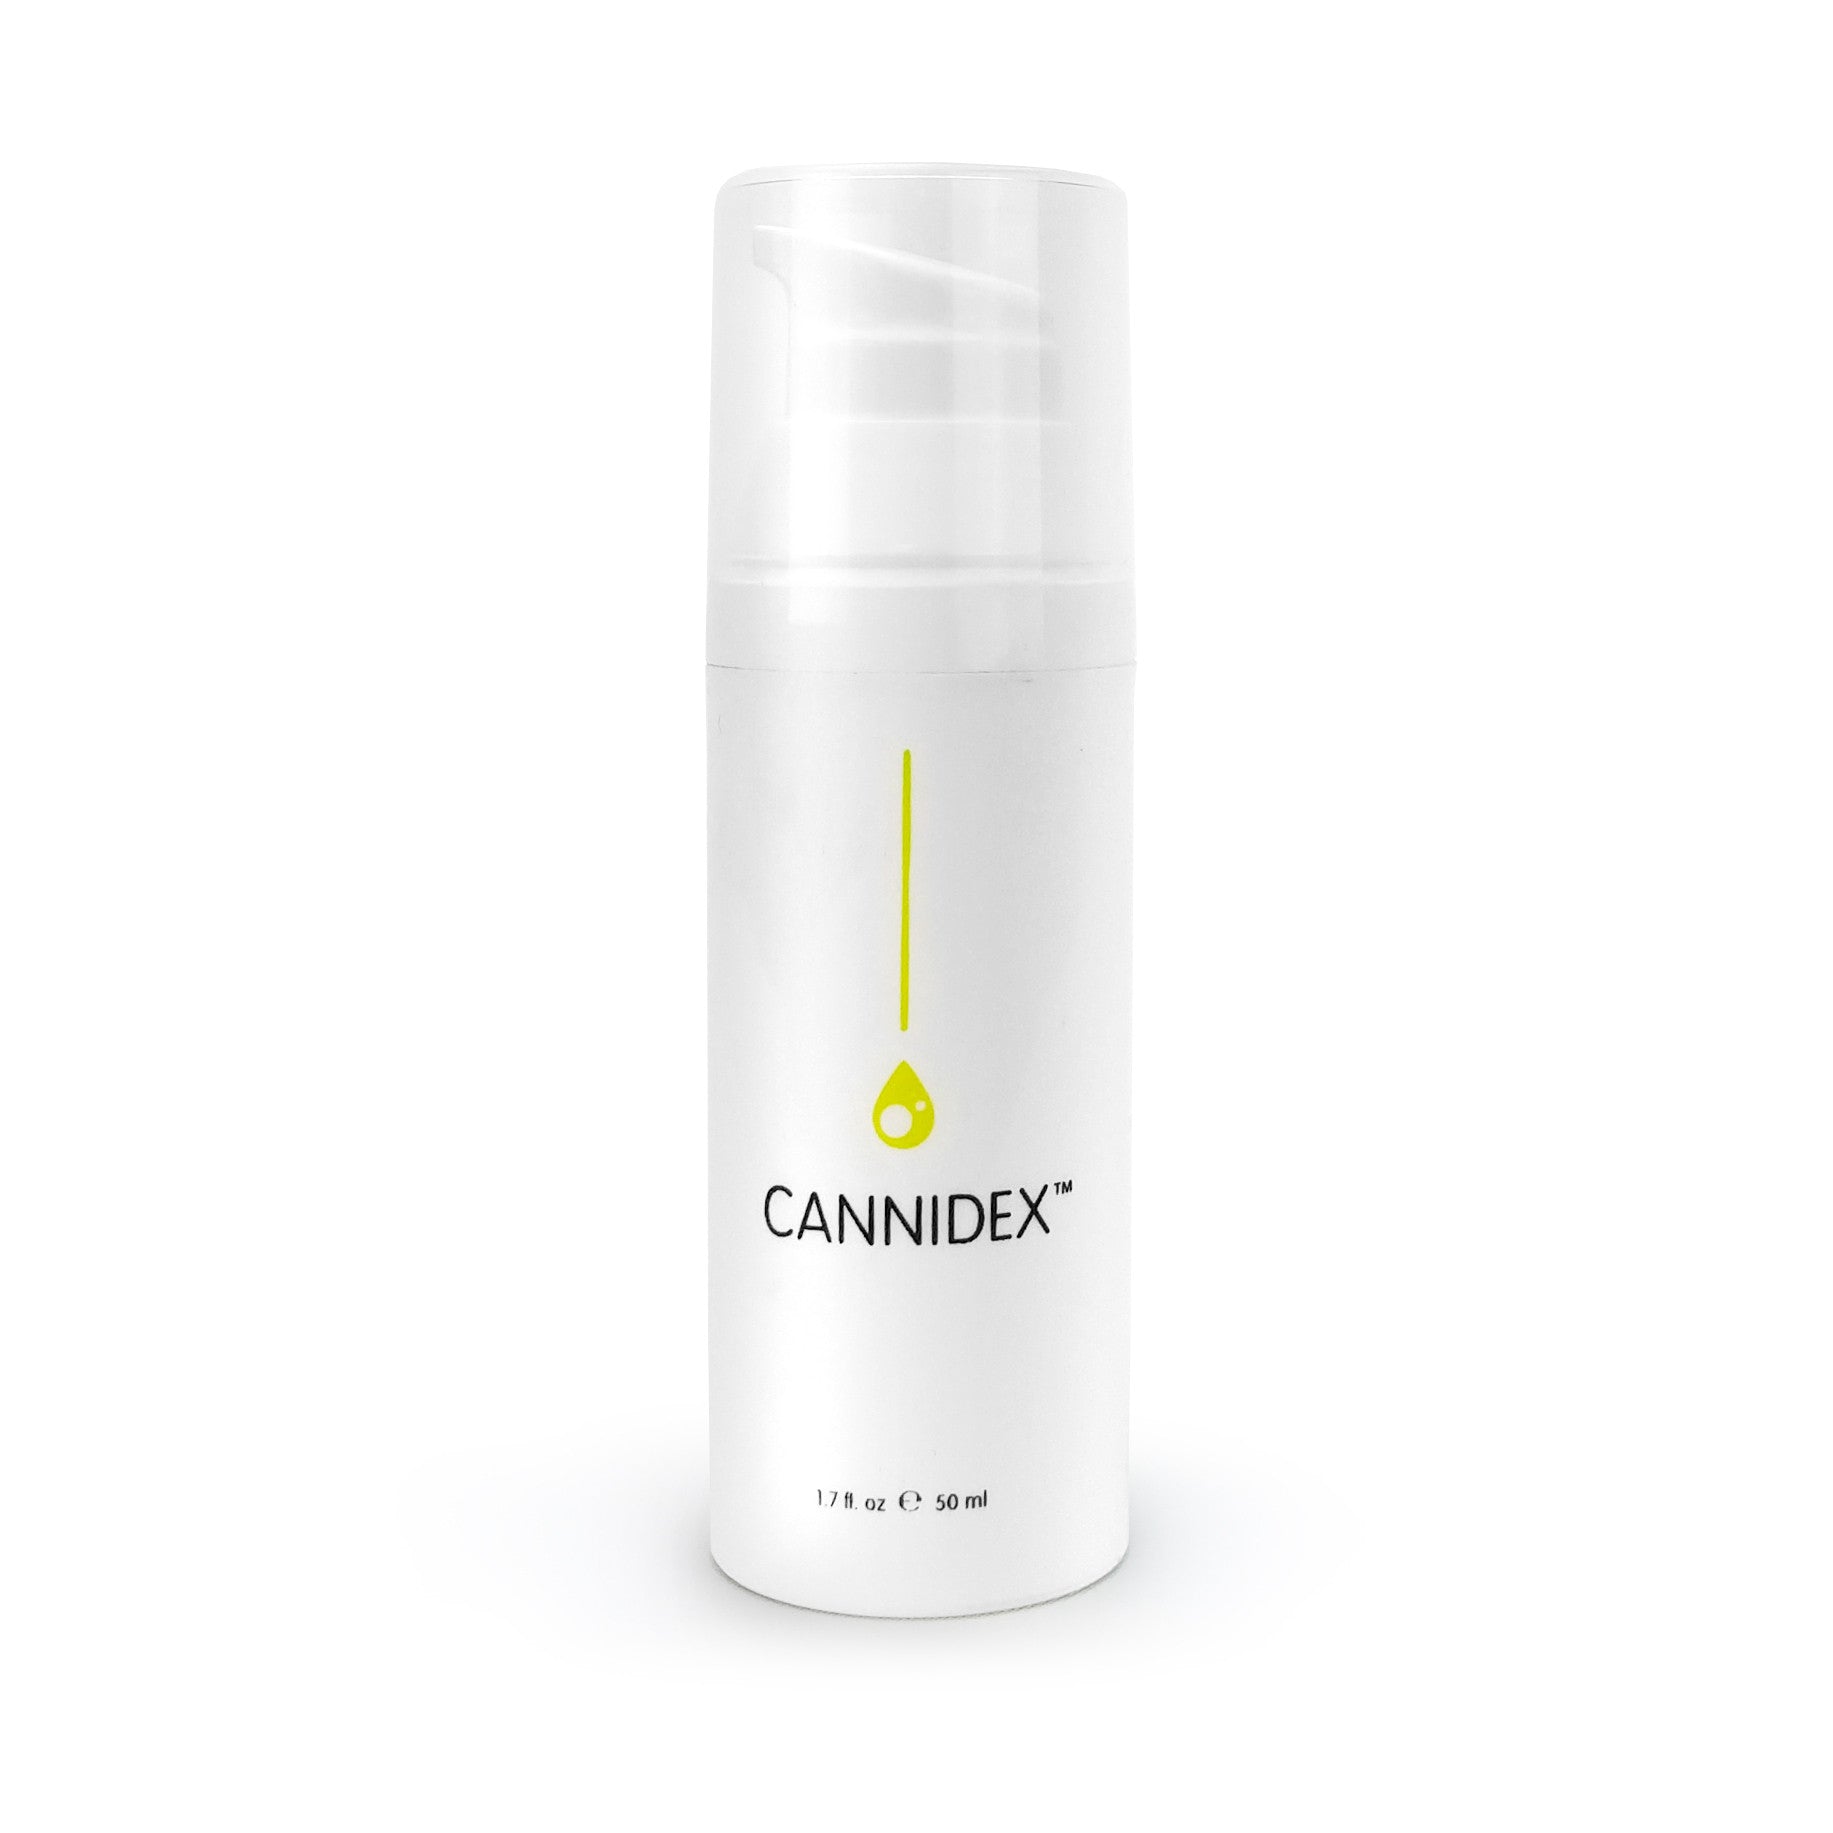 cannidex bottle